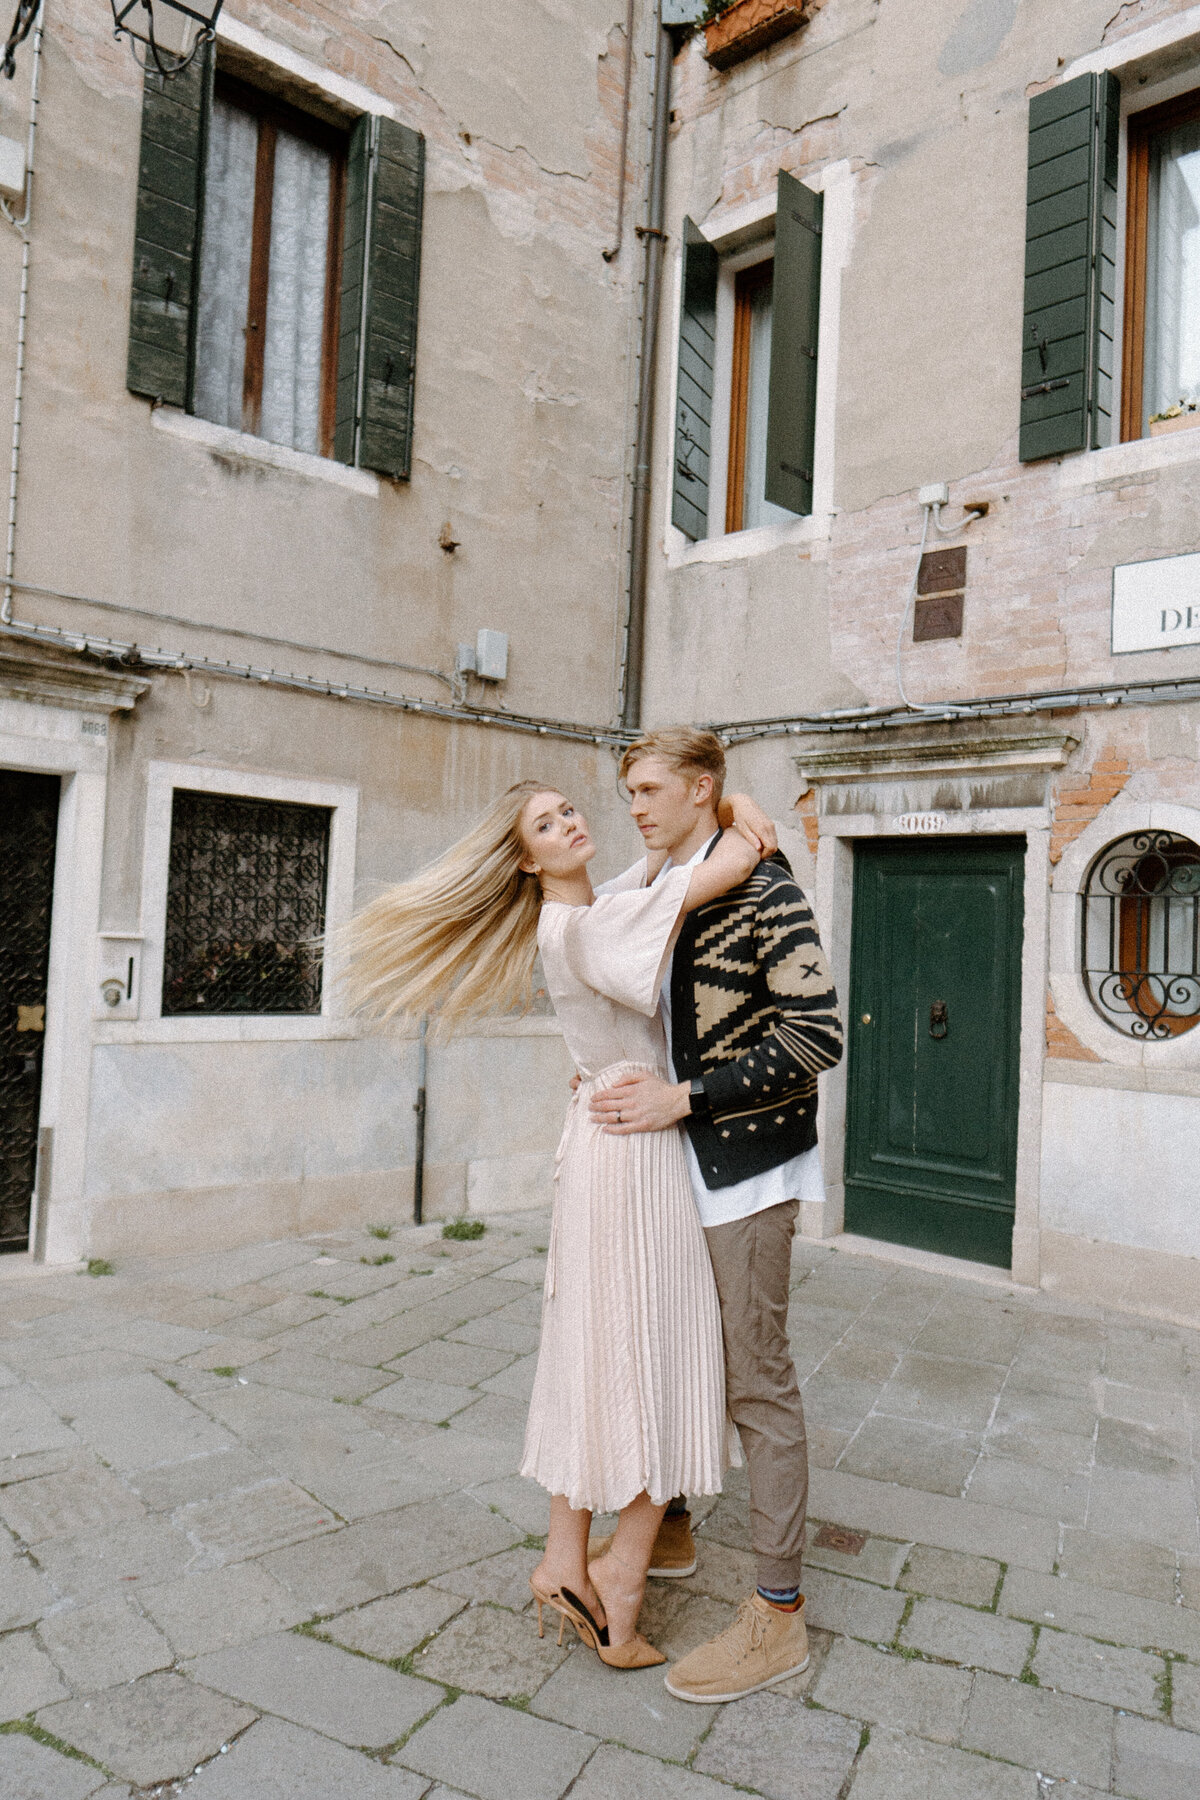 Documentary-Style-Editorial-Vogue-Italy-Destination-Wedding-Leah-Gunn-Photography-16